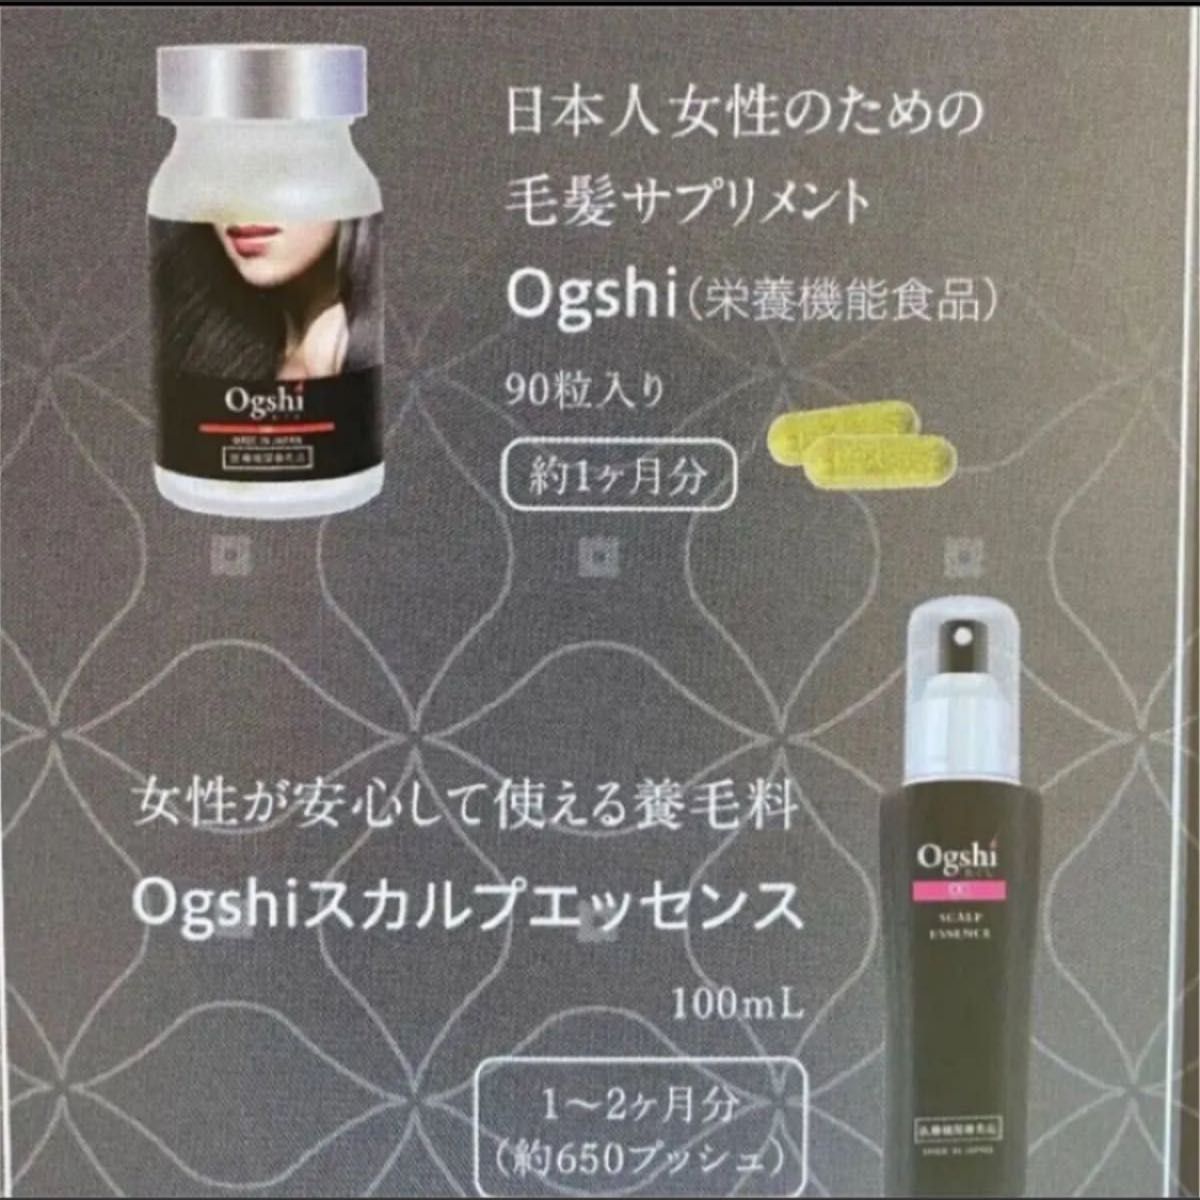 Ogshi おぐし 毛髪サプリメント スカルプエッセンス セット オグシ